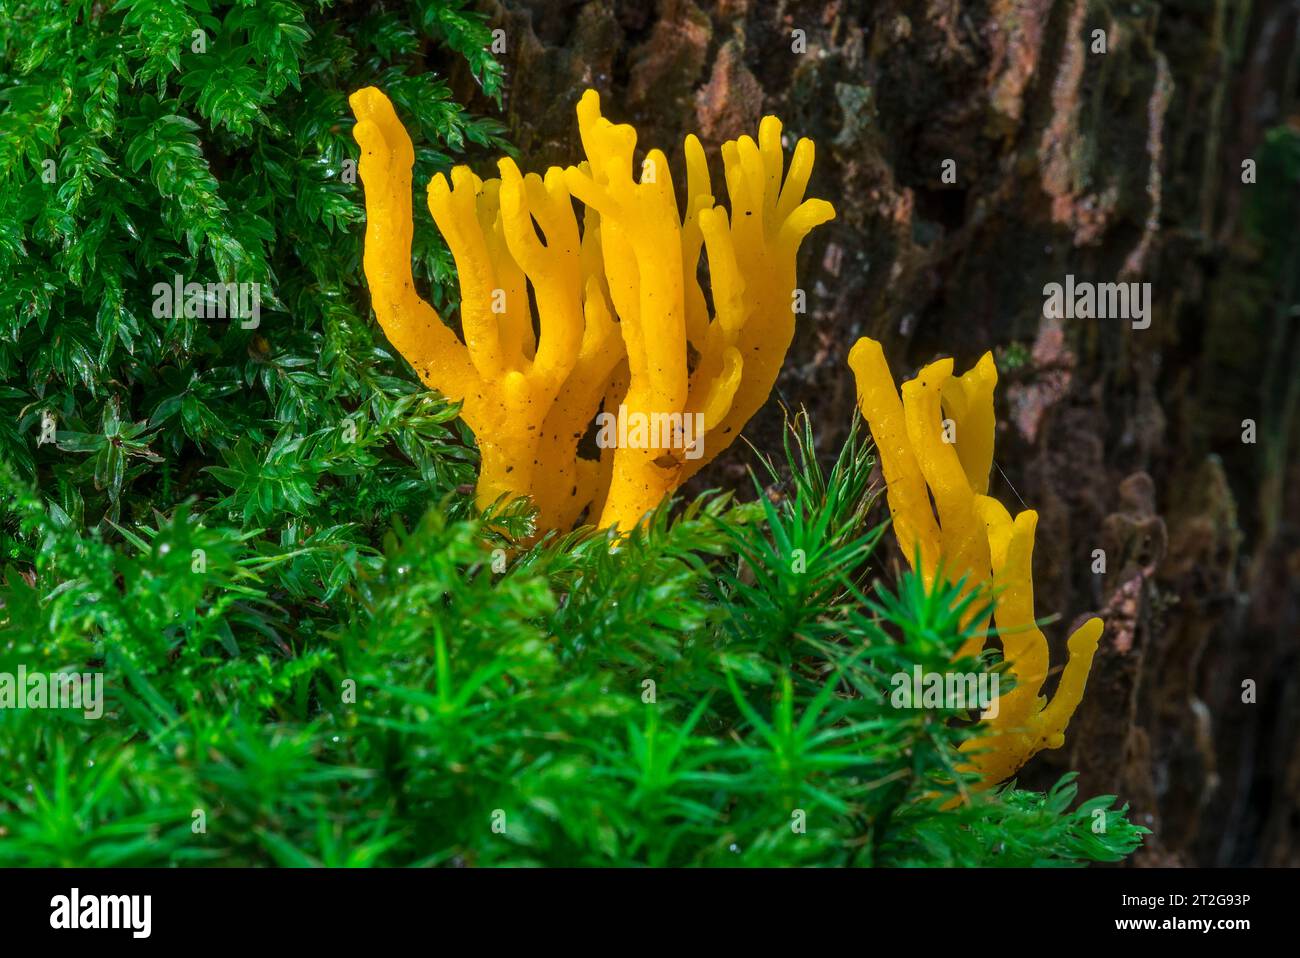 Charranco amarillo (Calocera viscosa), hongo gelatinoso con basidiocarpos de ramificación naranja típicos que crecen en madera de conífera en descomposición en bosque de otoño Foto de stock